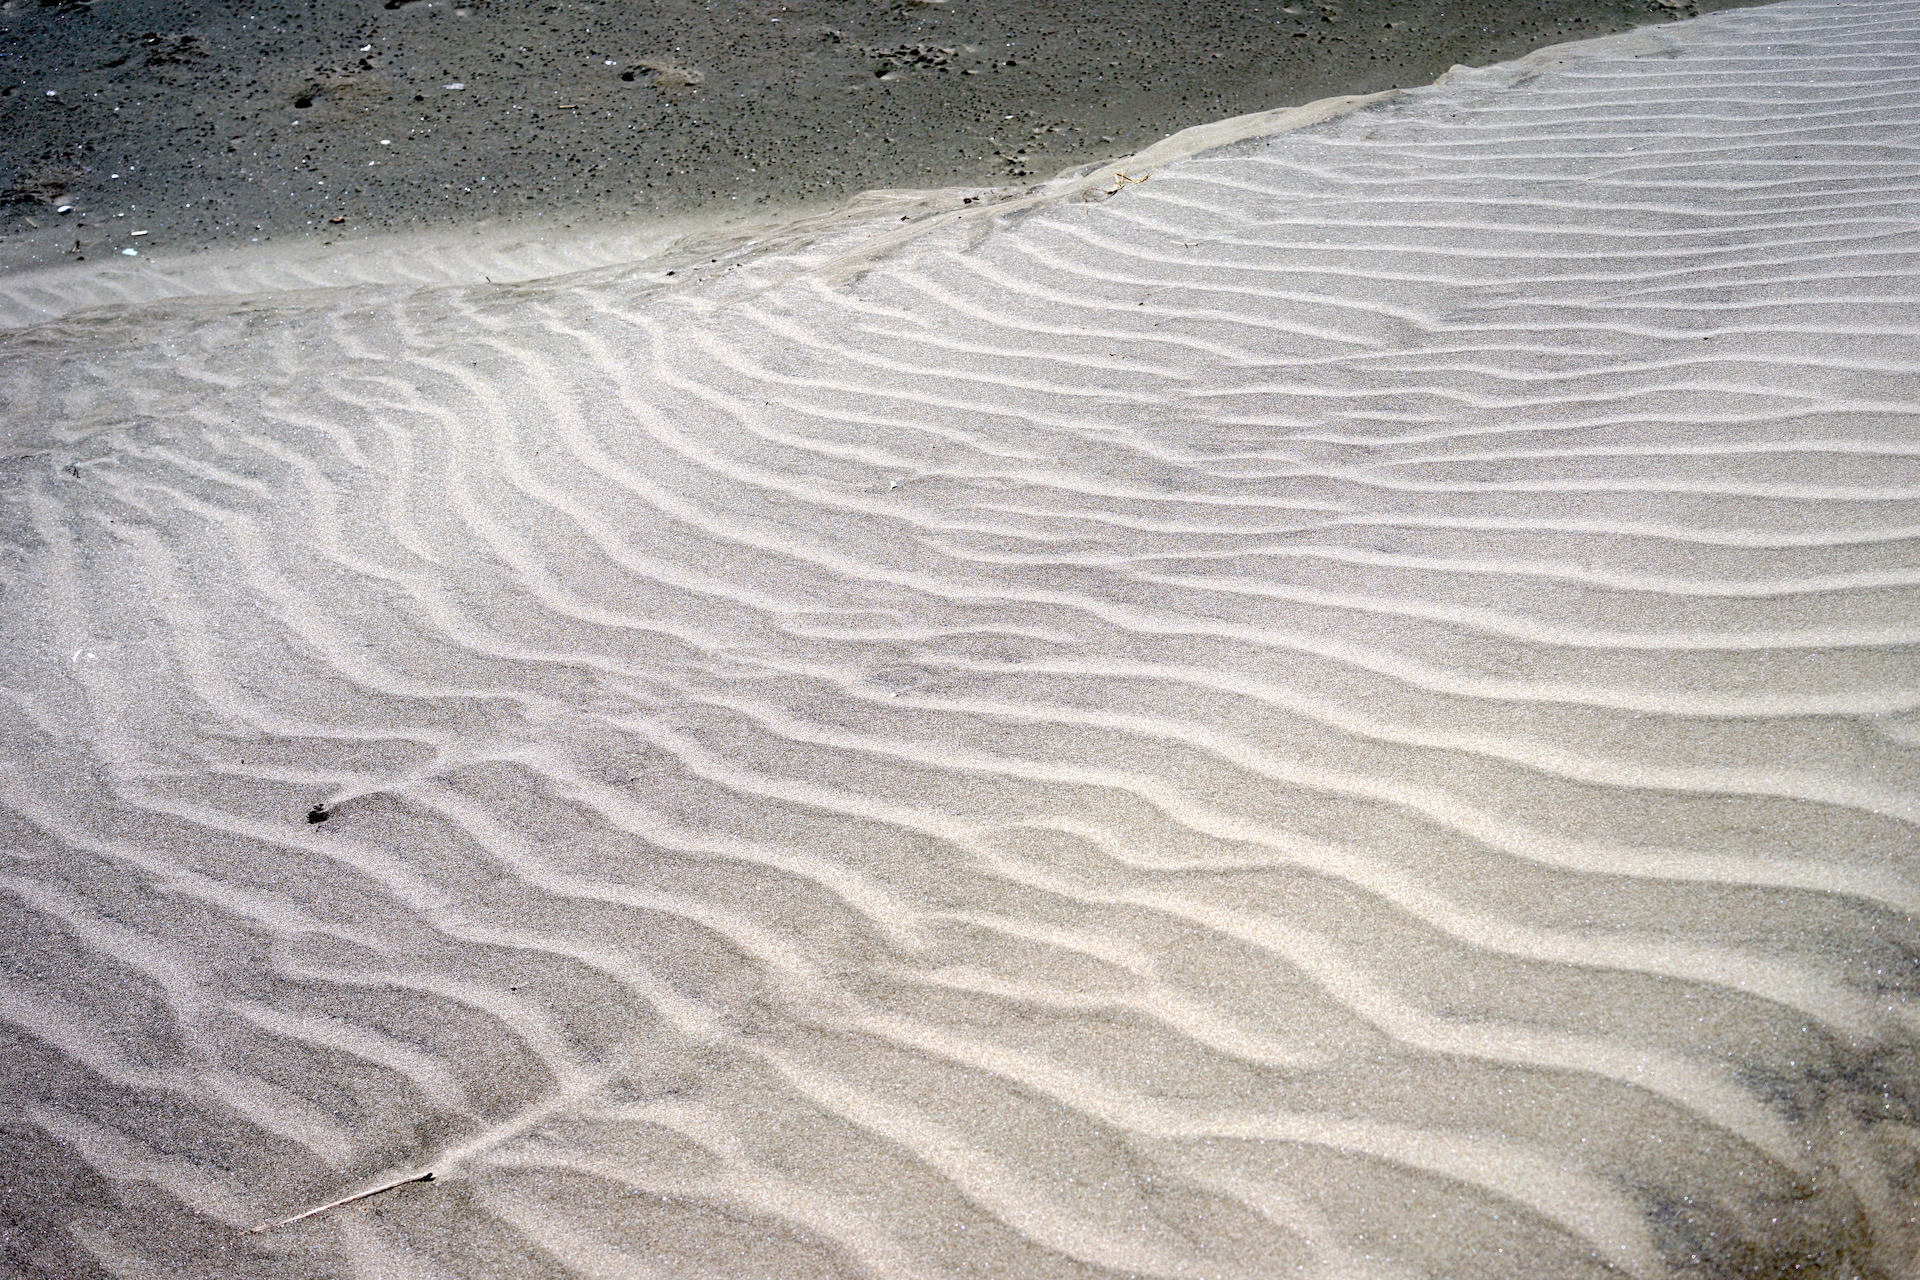 Wind ripples found in sandy beach around Inu-Iwa Rock, Choshi, Chiba, 2021 by Katsuaki Watanabe